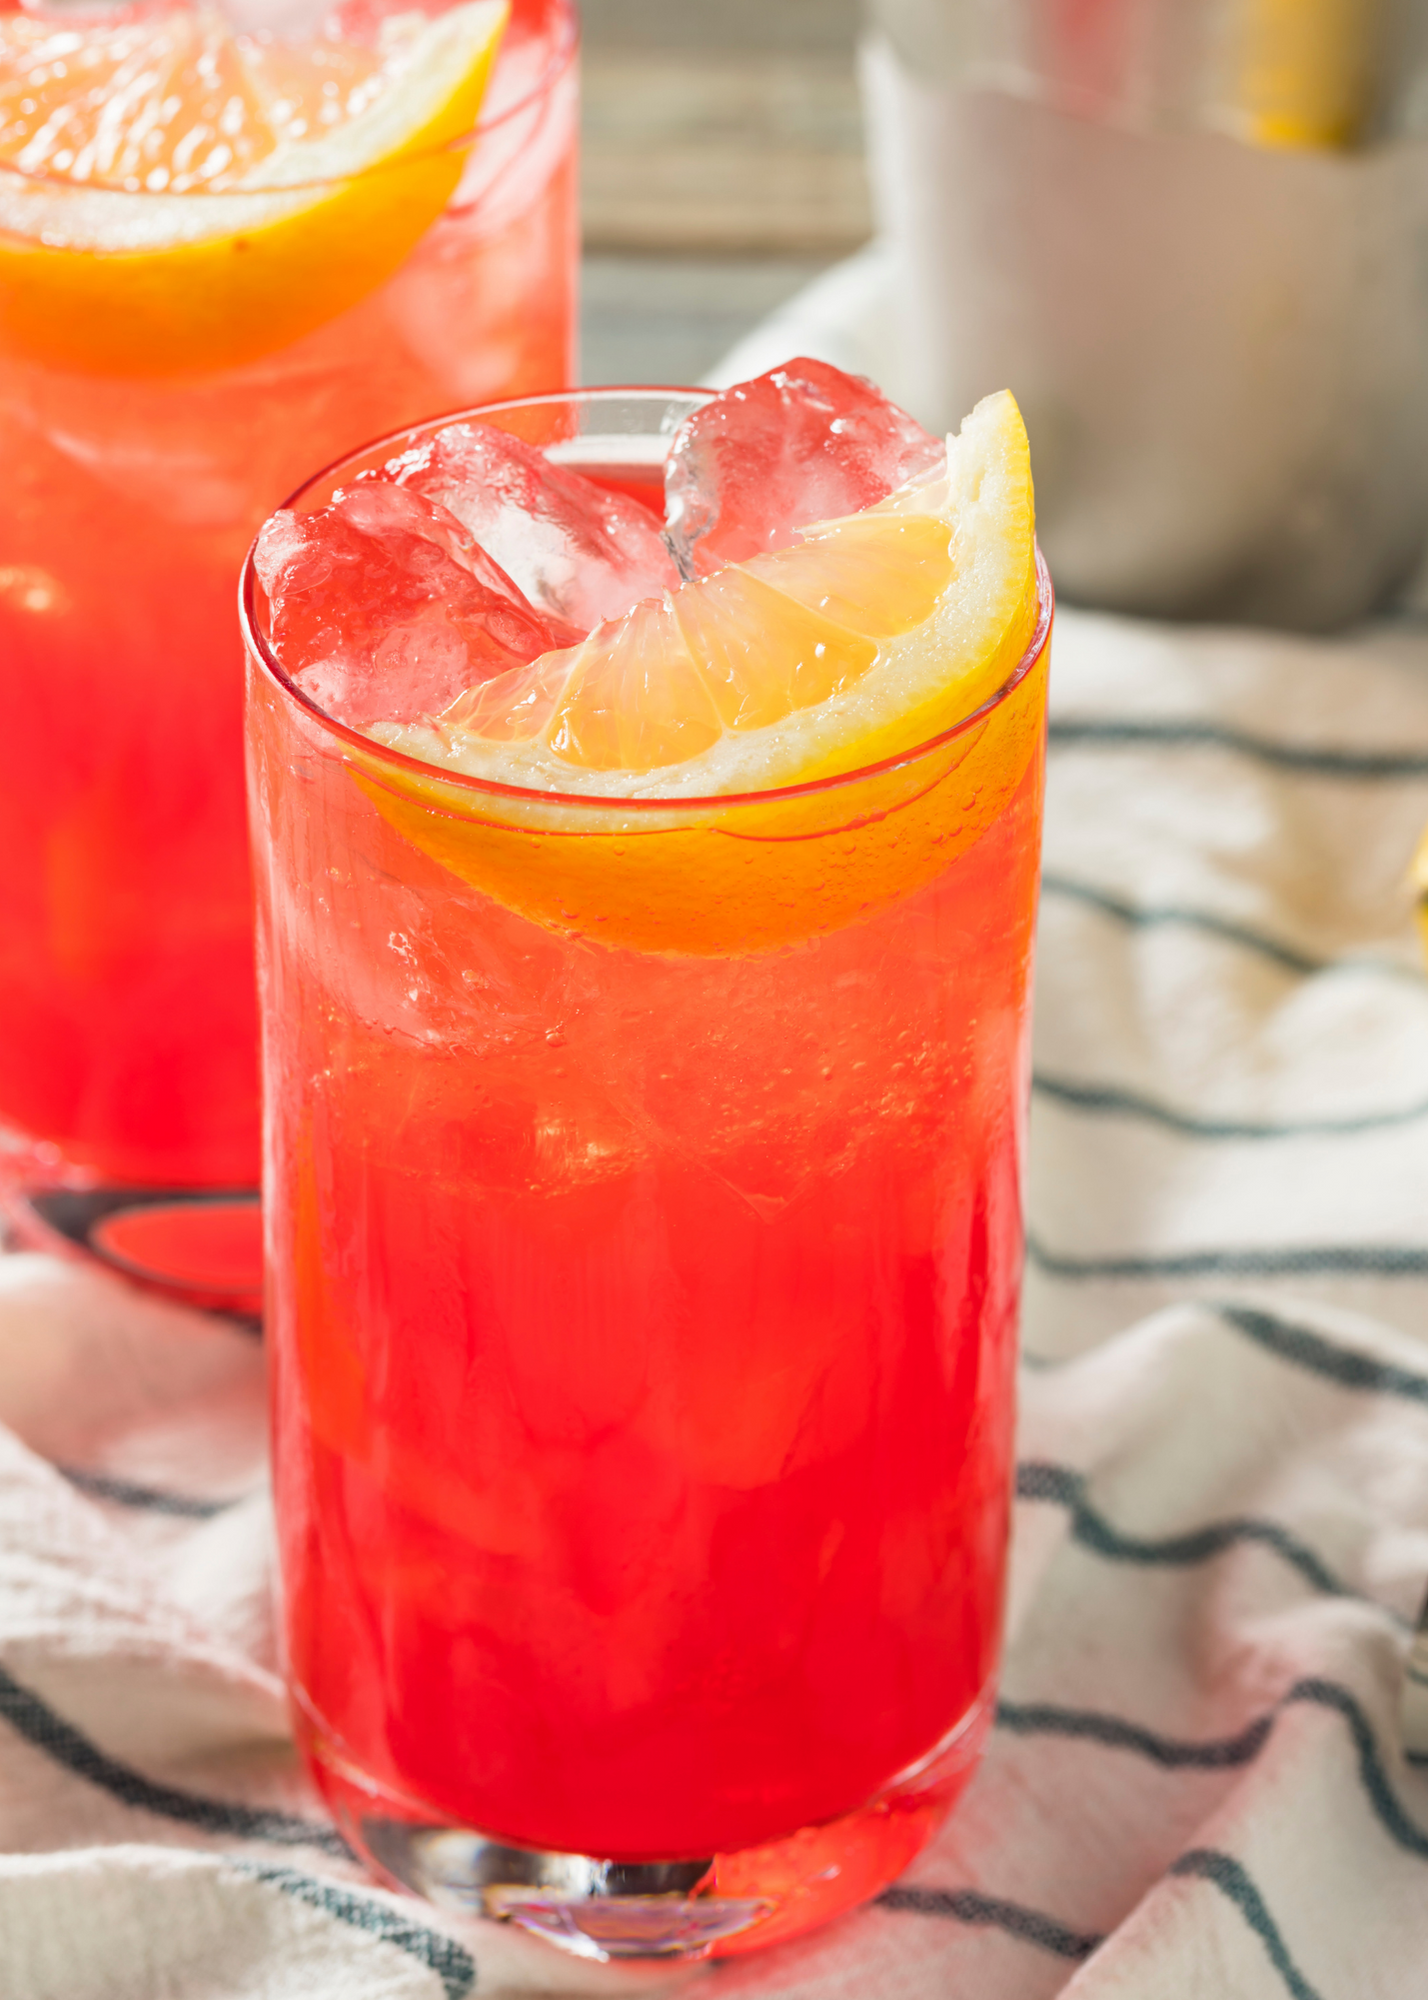 Alabama Slammer cocktail with orange wedge on a towel